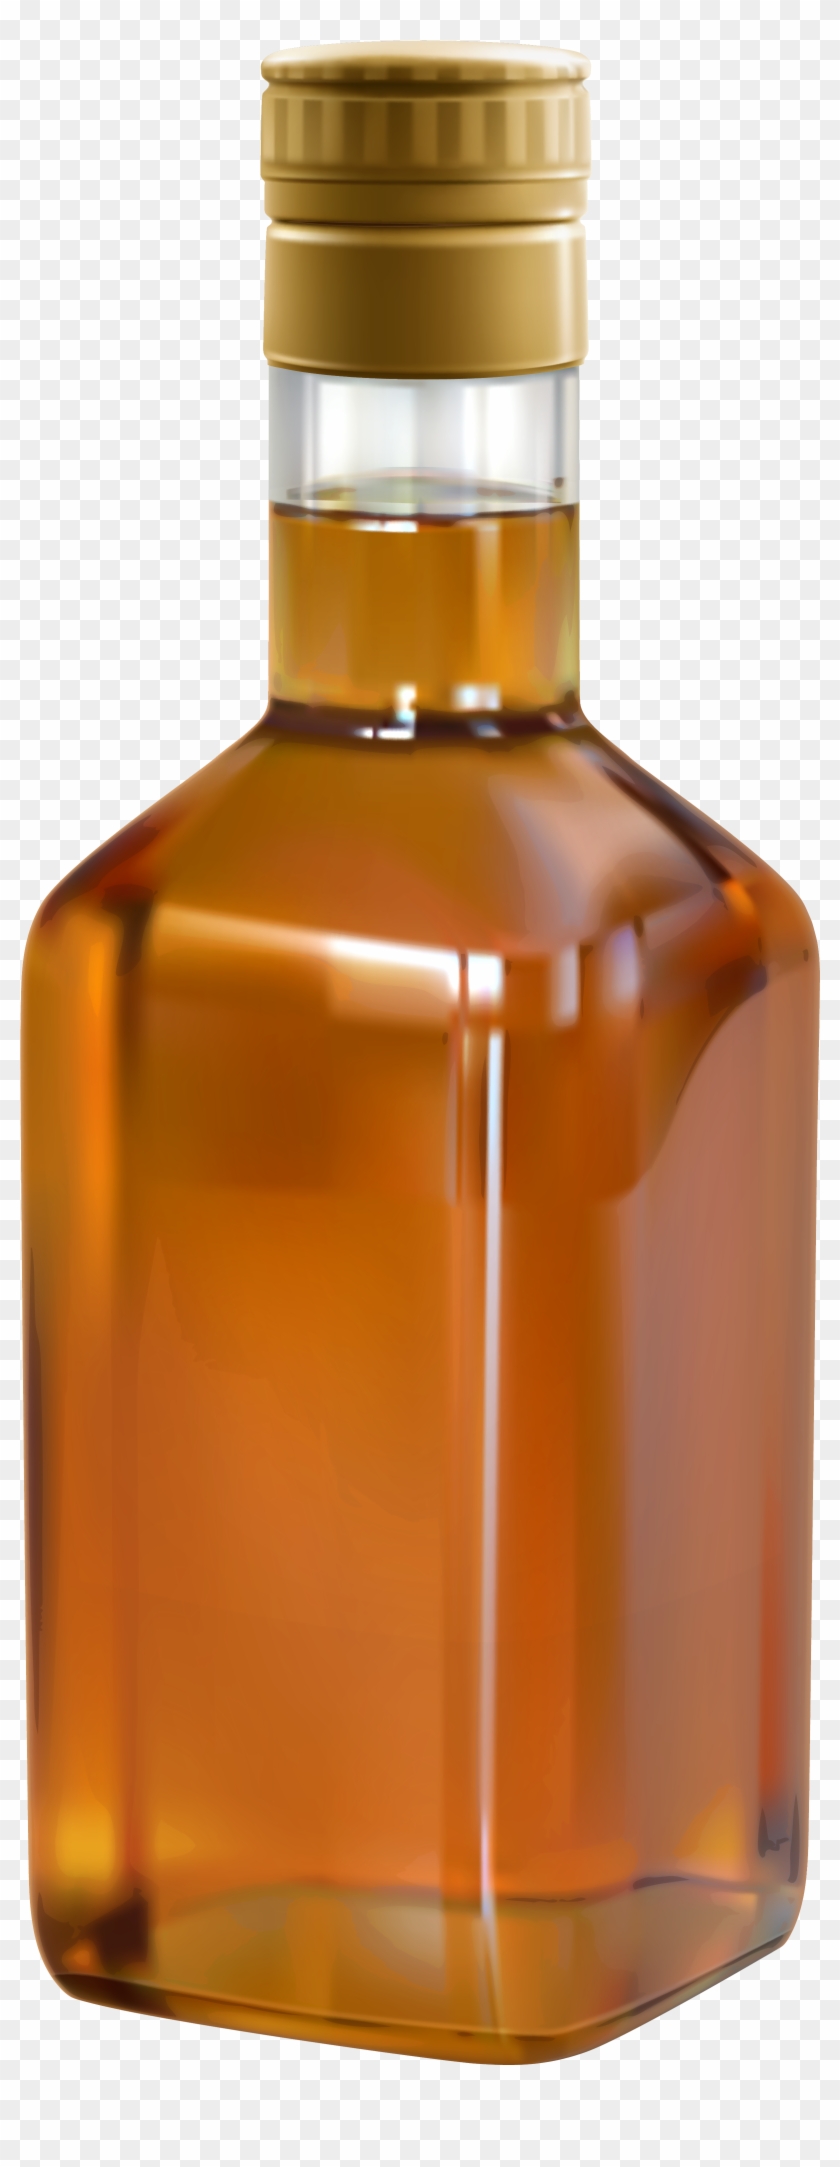 Bottle Of Whisky Png #391281